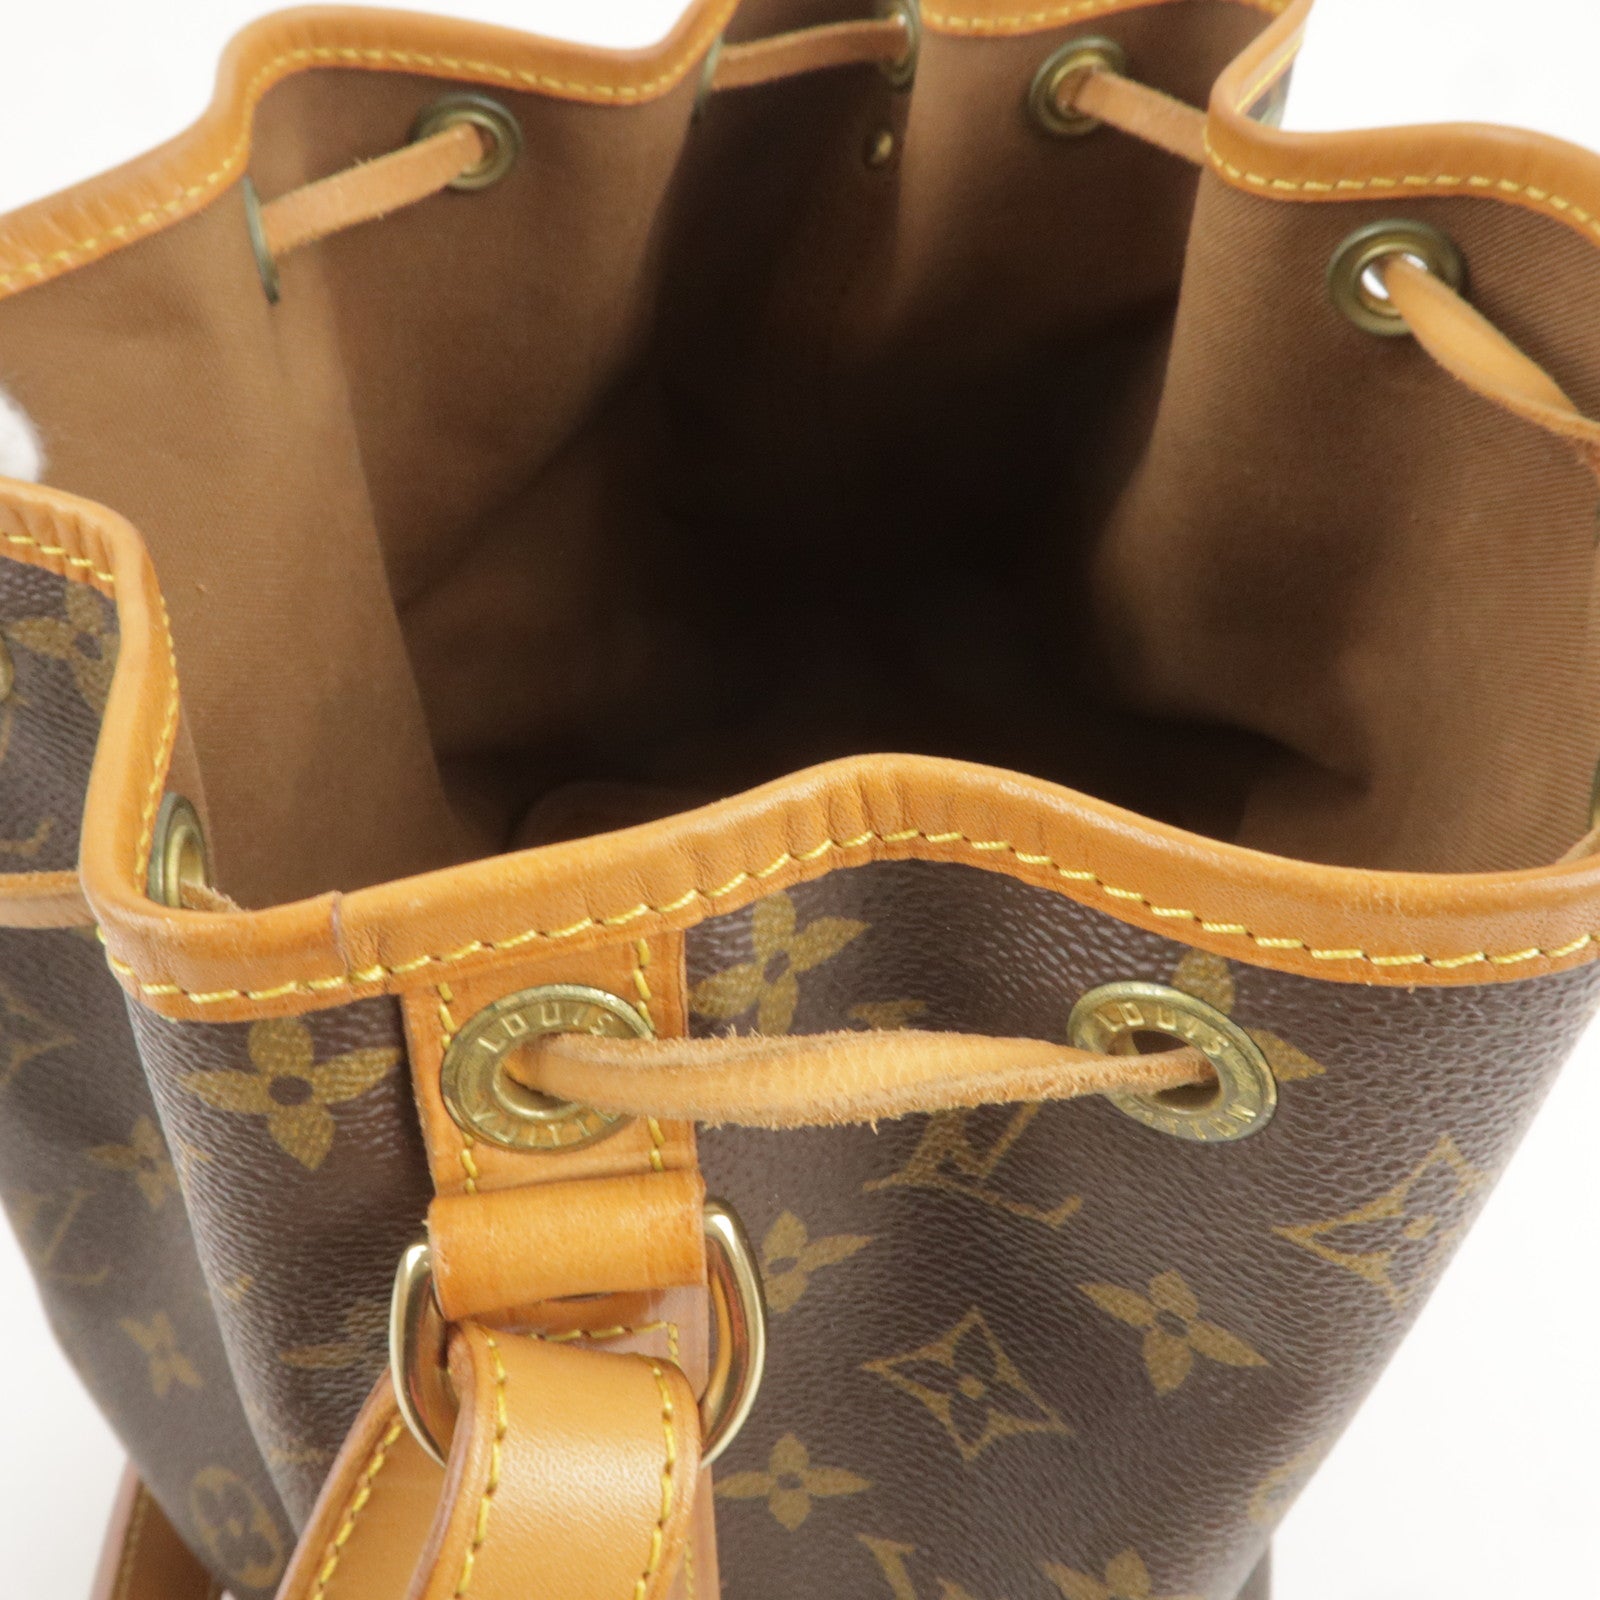 Louis Vuitton Monogram Noe GM Hobo Shoulder Tote Bag